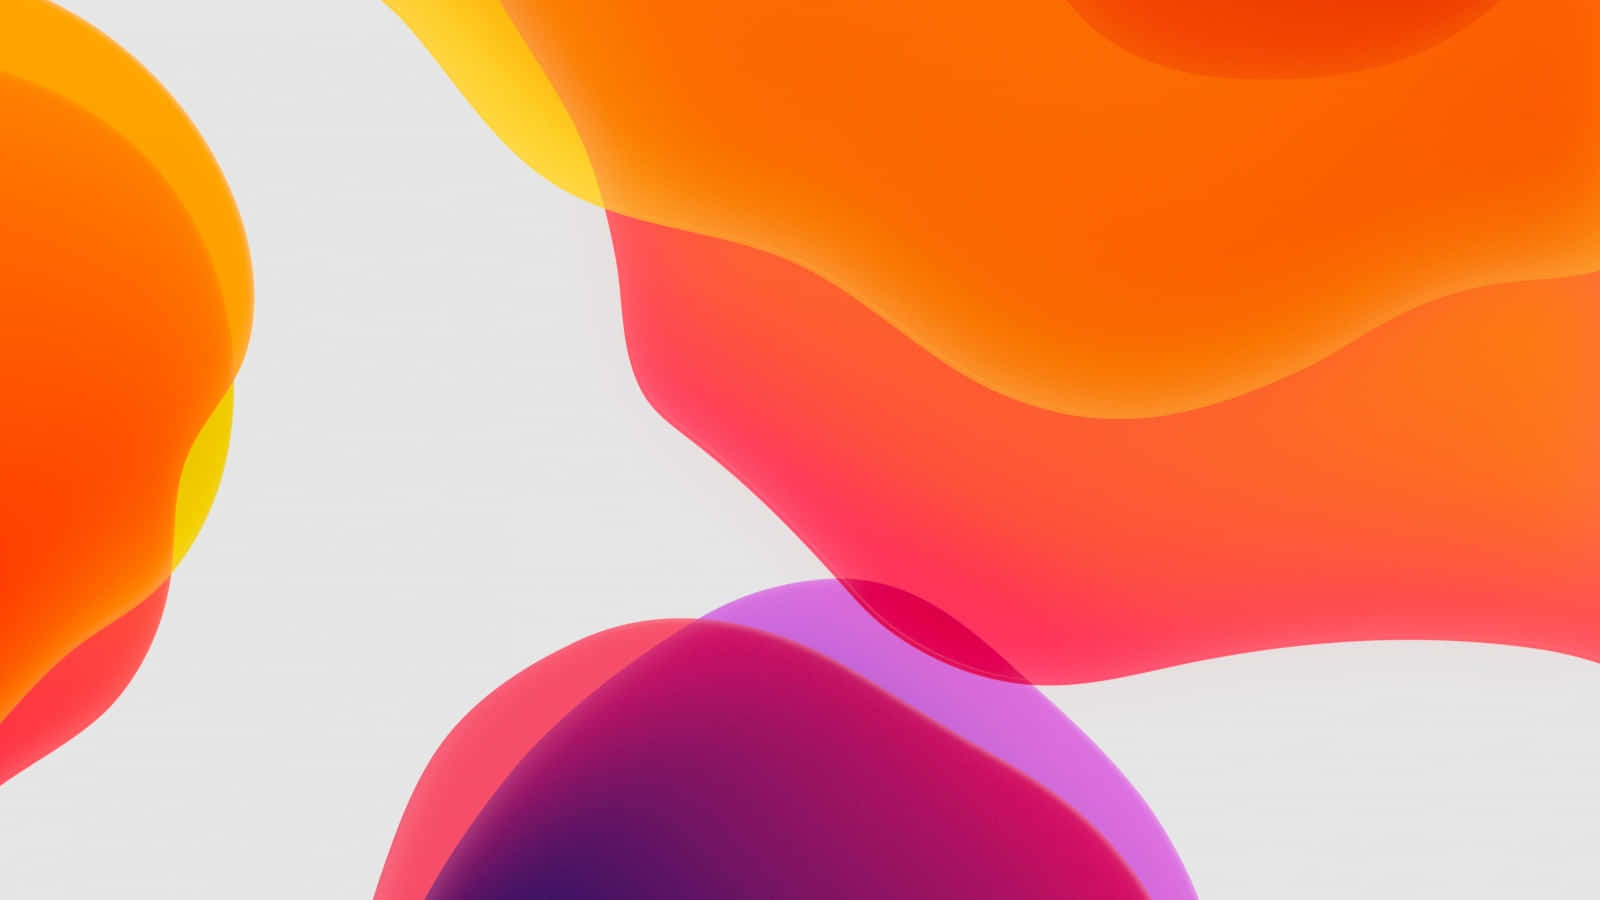 Standard Abstract Shapes For Desktop Background